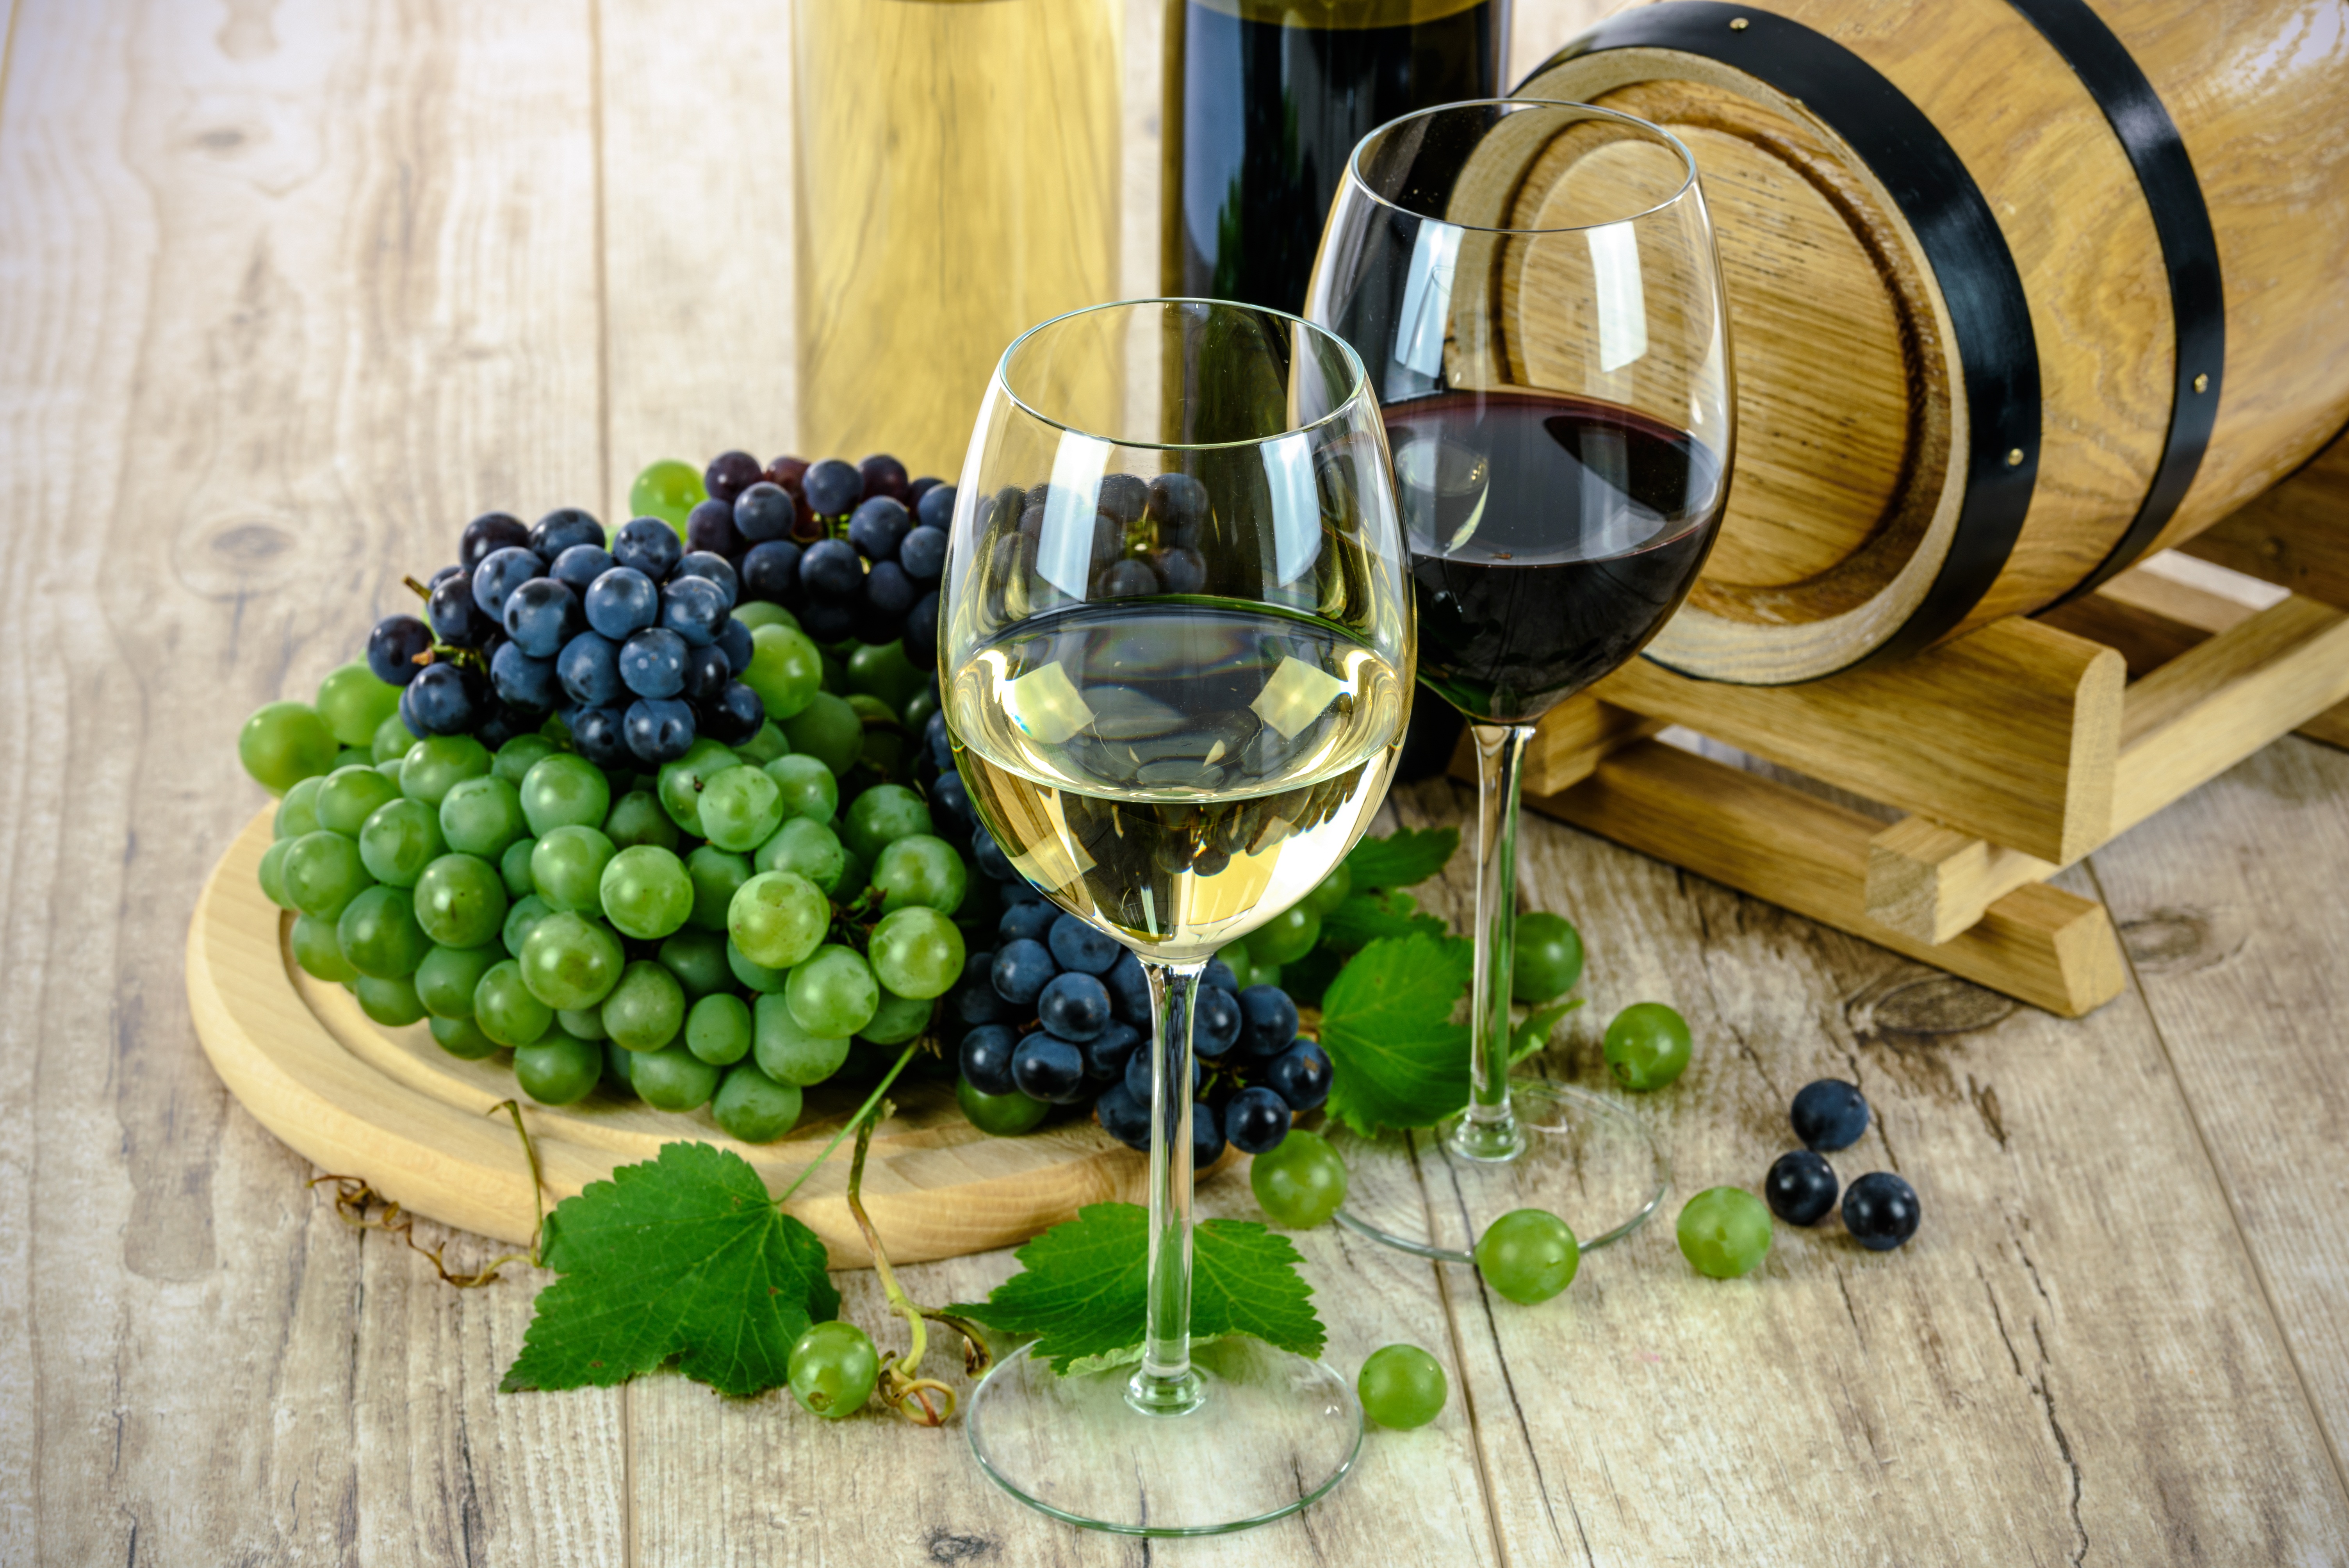 Картинку вине. Вино и виноград. Виноградная лоза вино. Бокал вина и виноград. Вино обои.